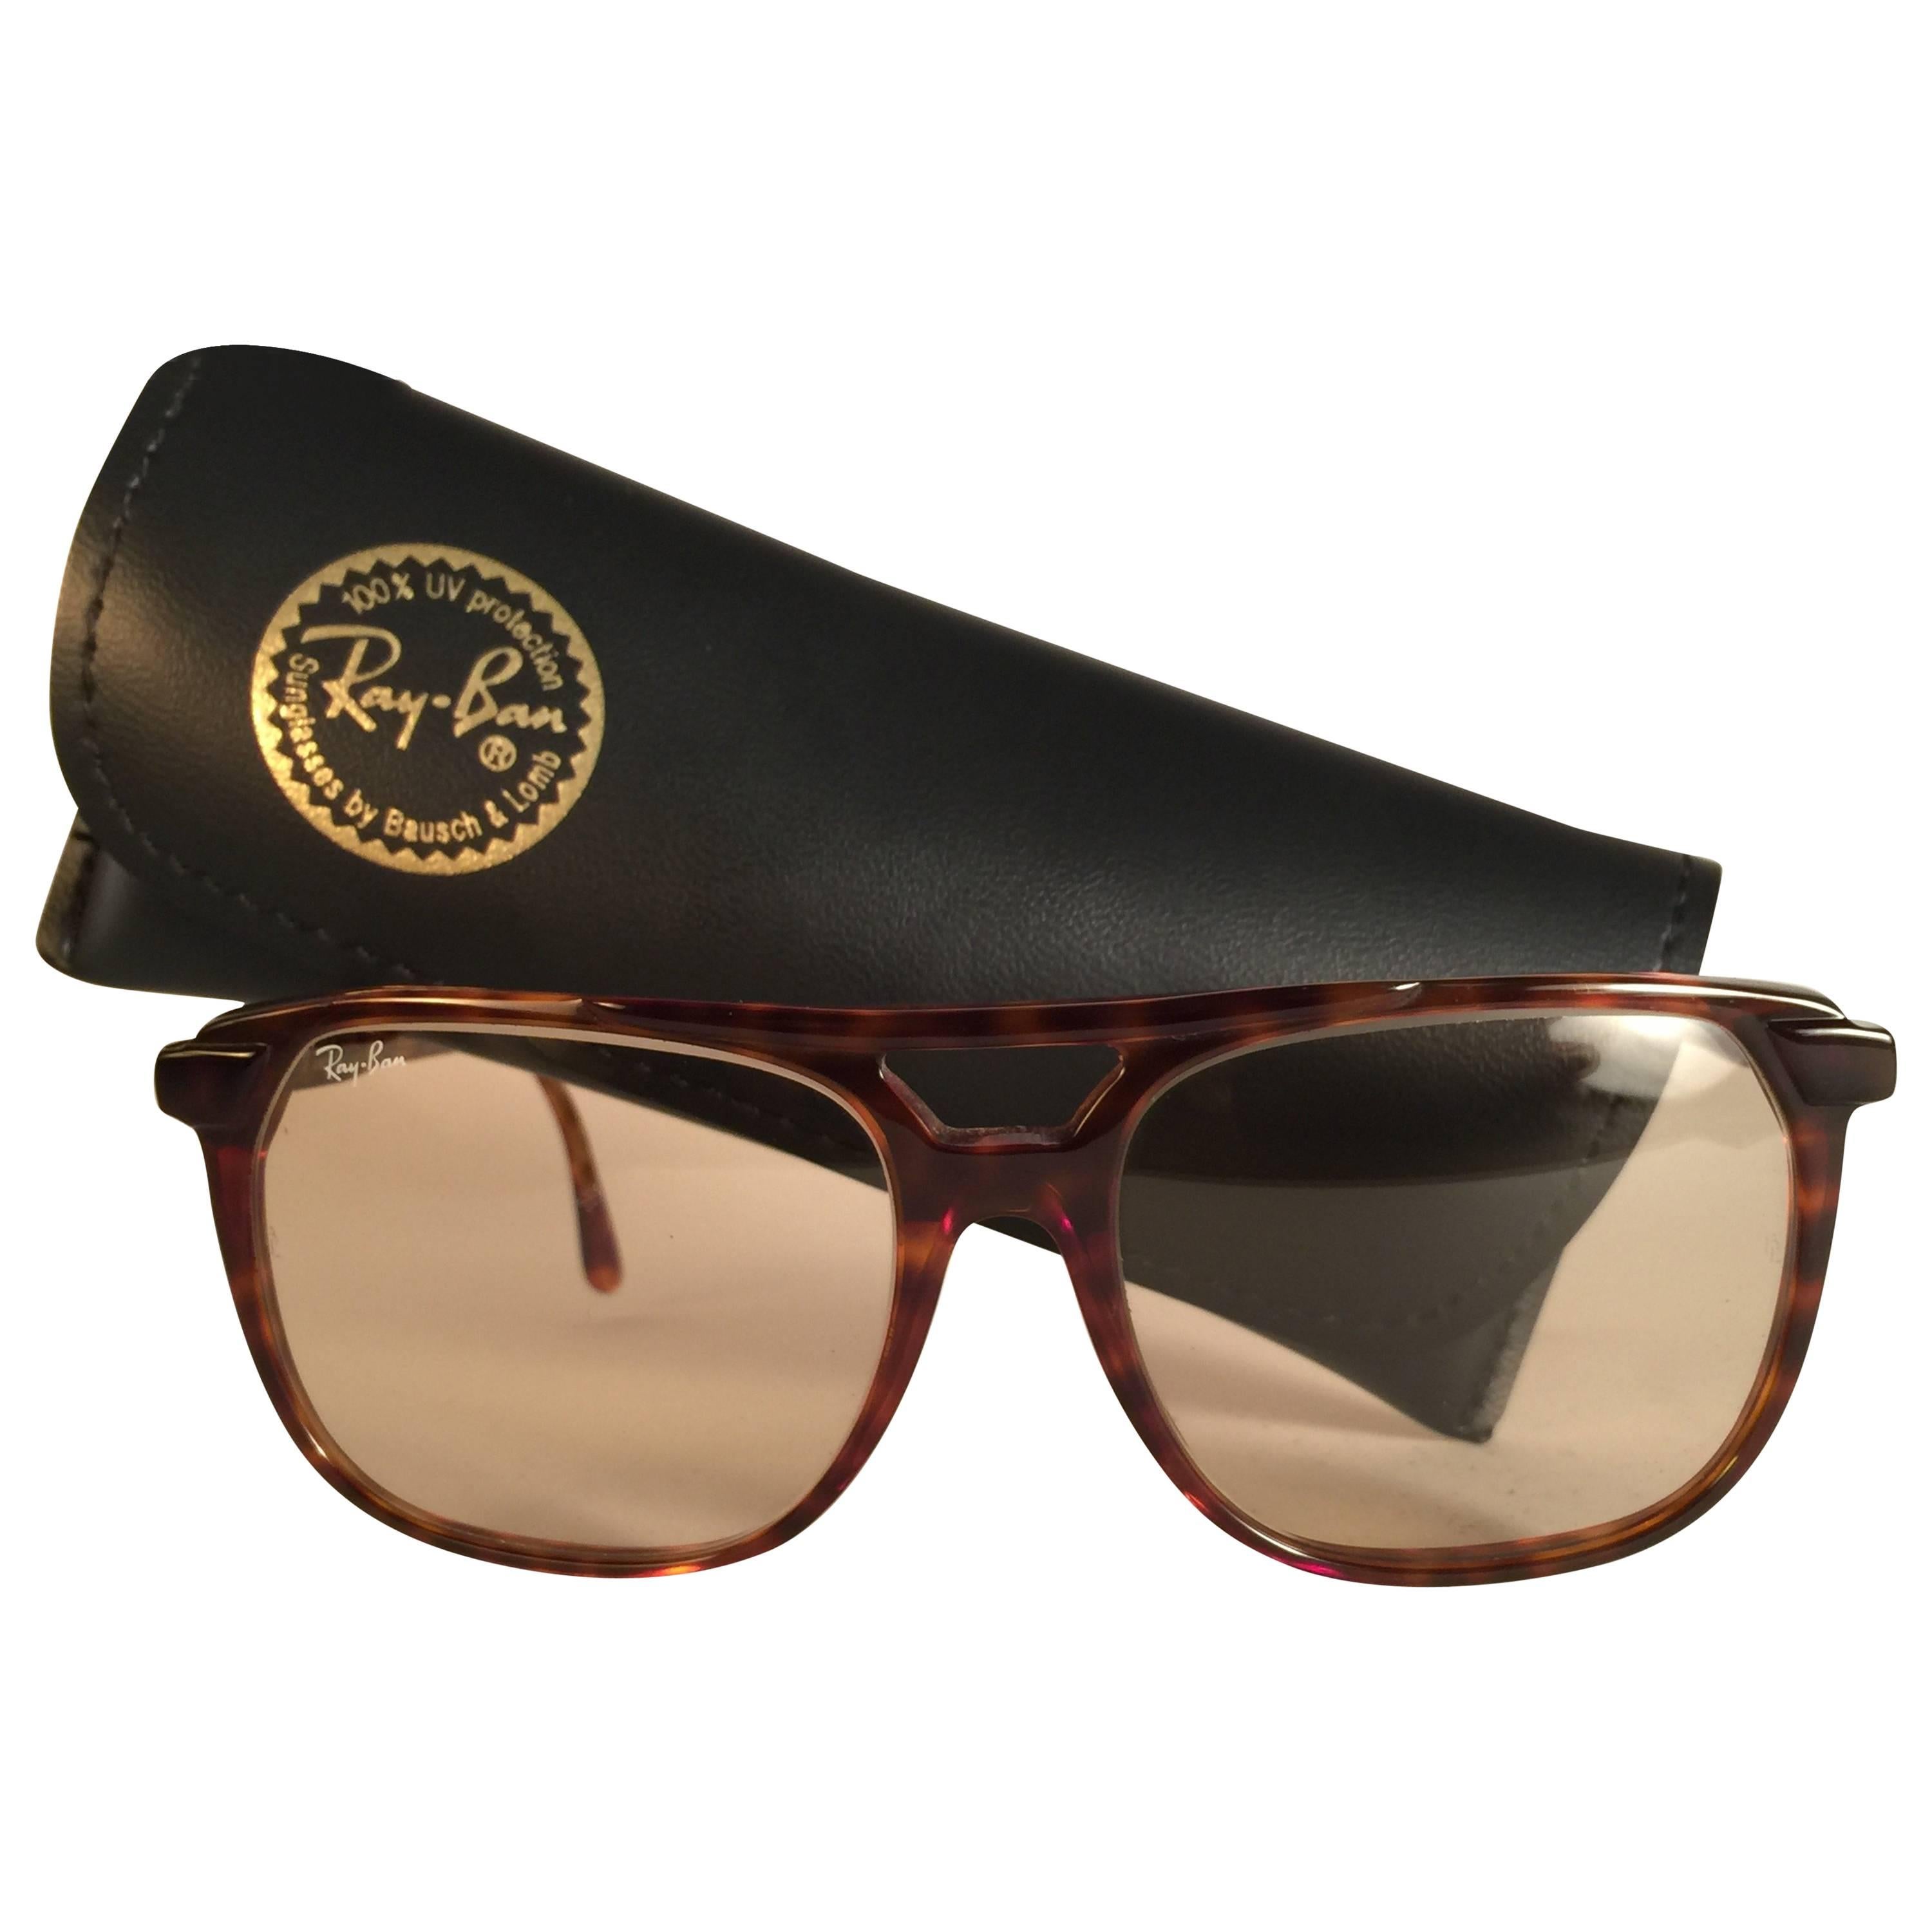 New Vintage Ray Ban Tortoise F1 Changeable Lenses B&L Sunglasses